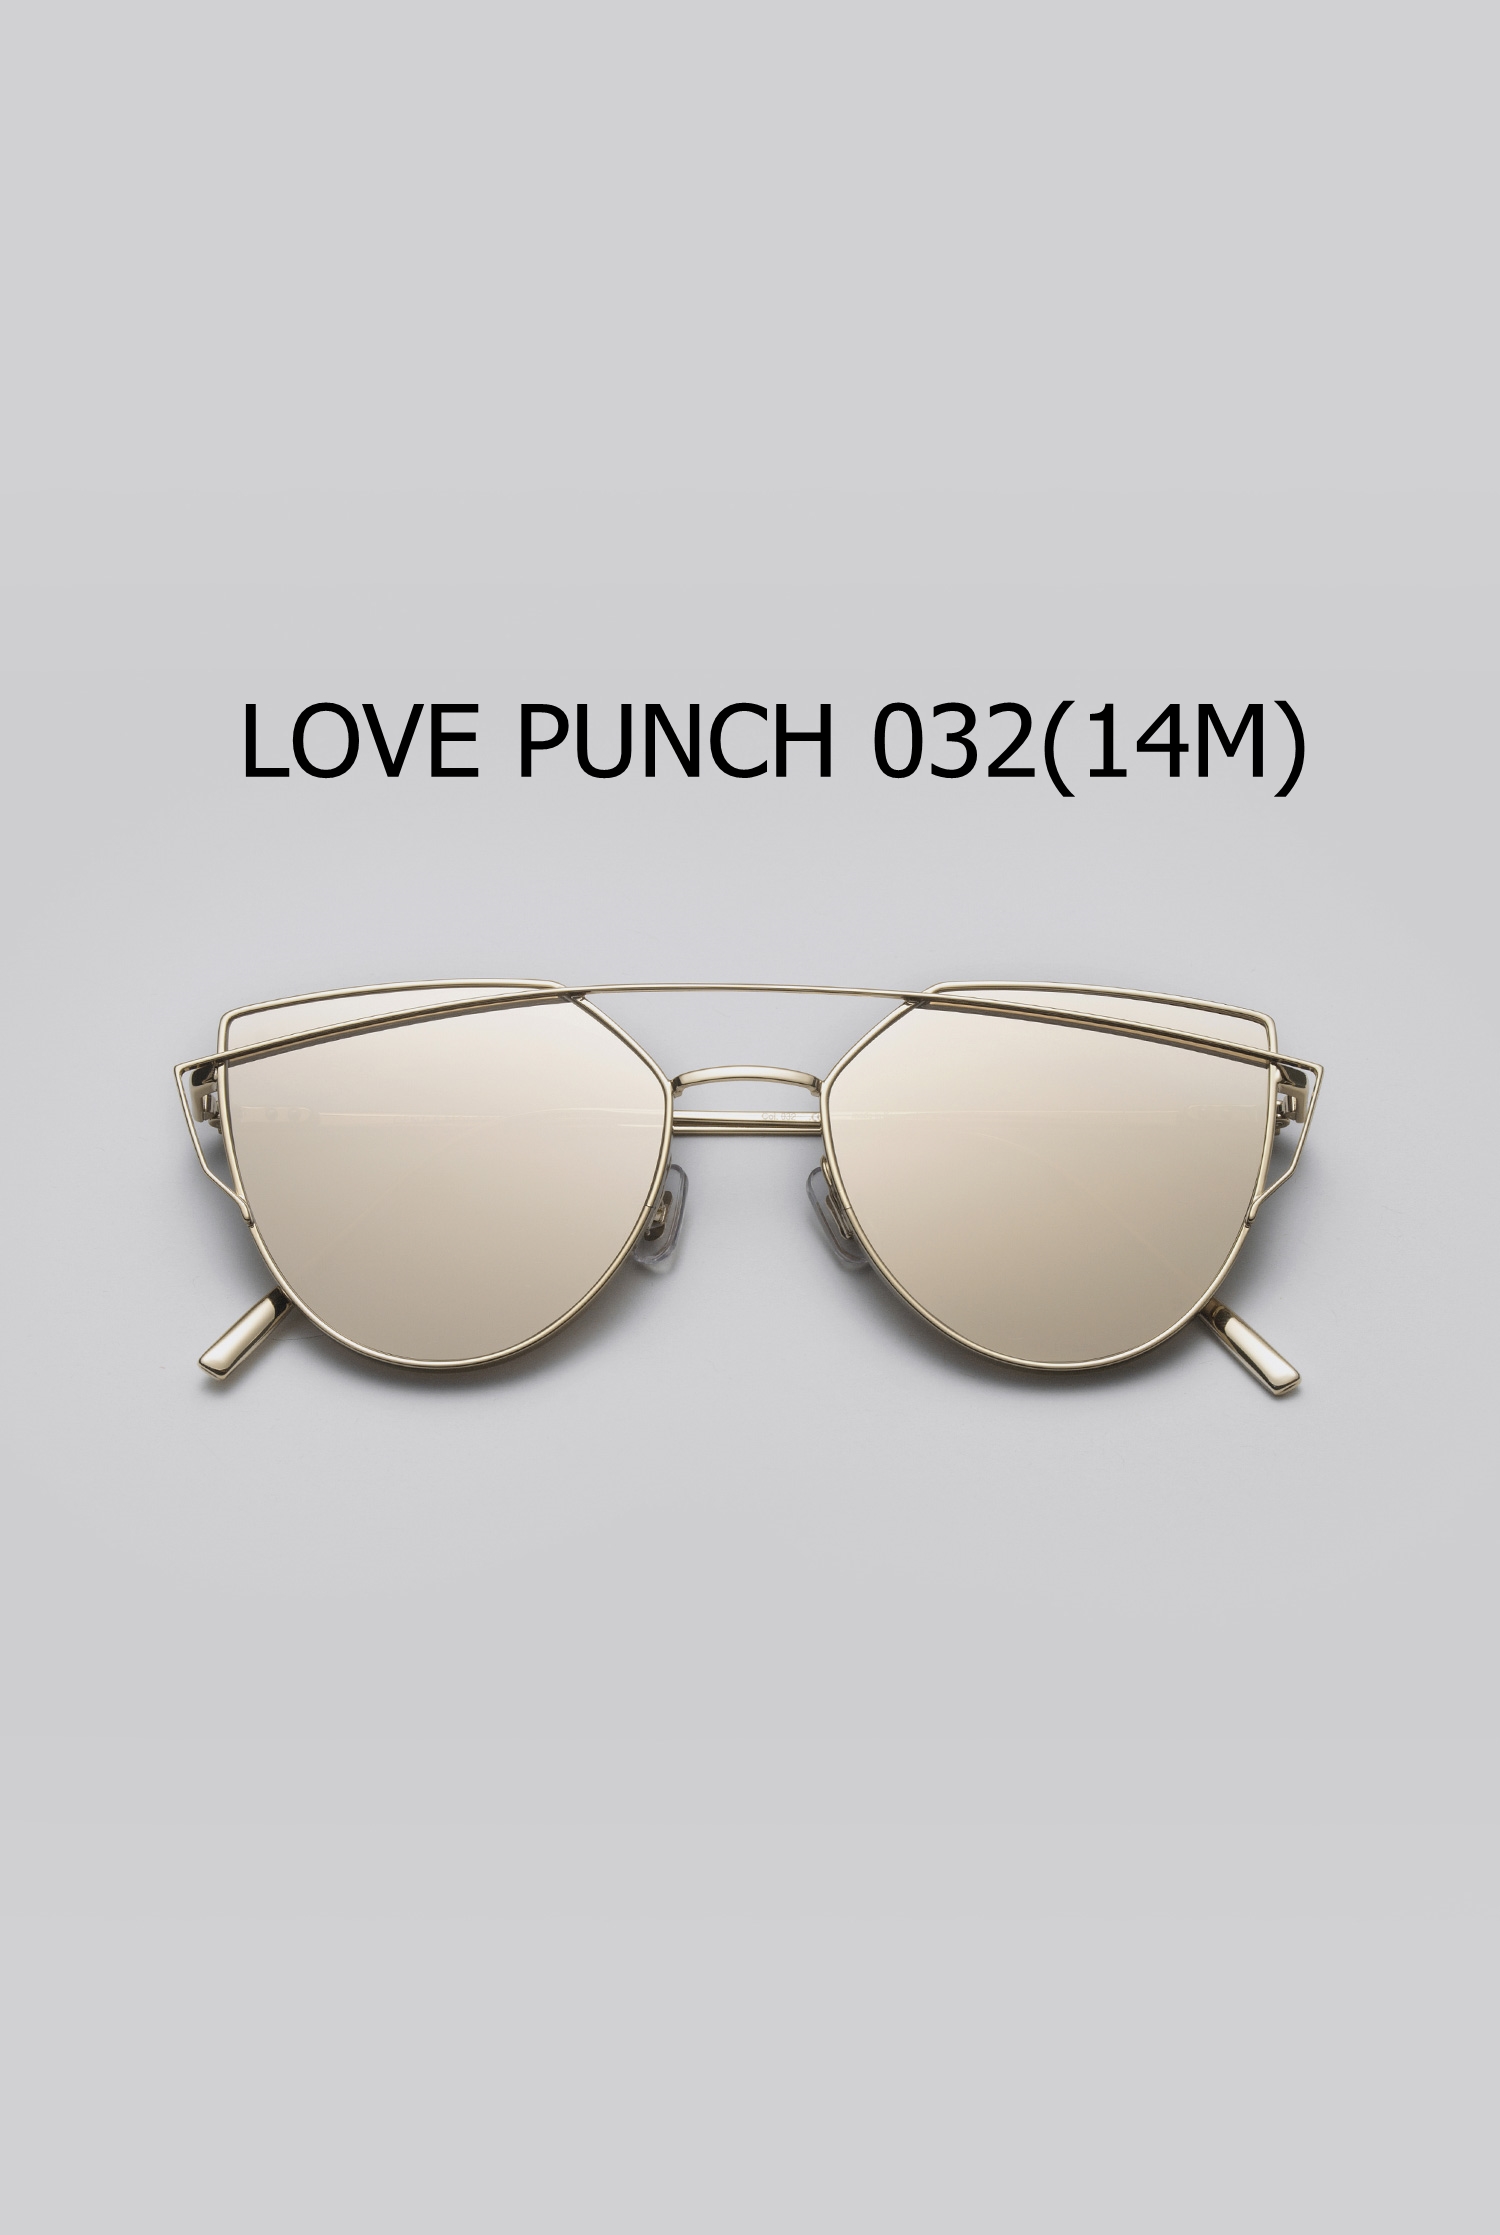 LOVE PUNCH 032(14M)